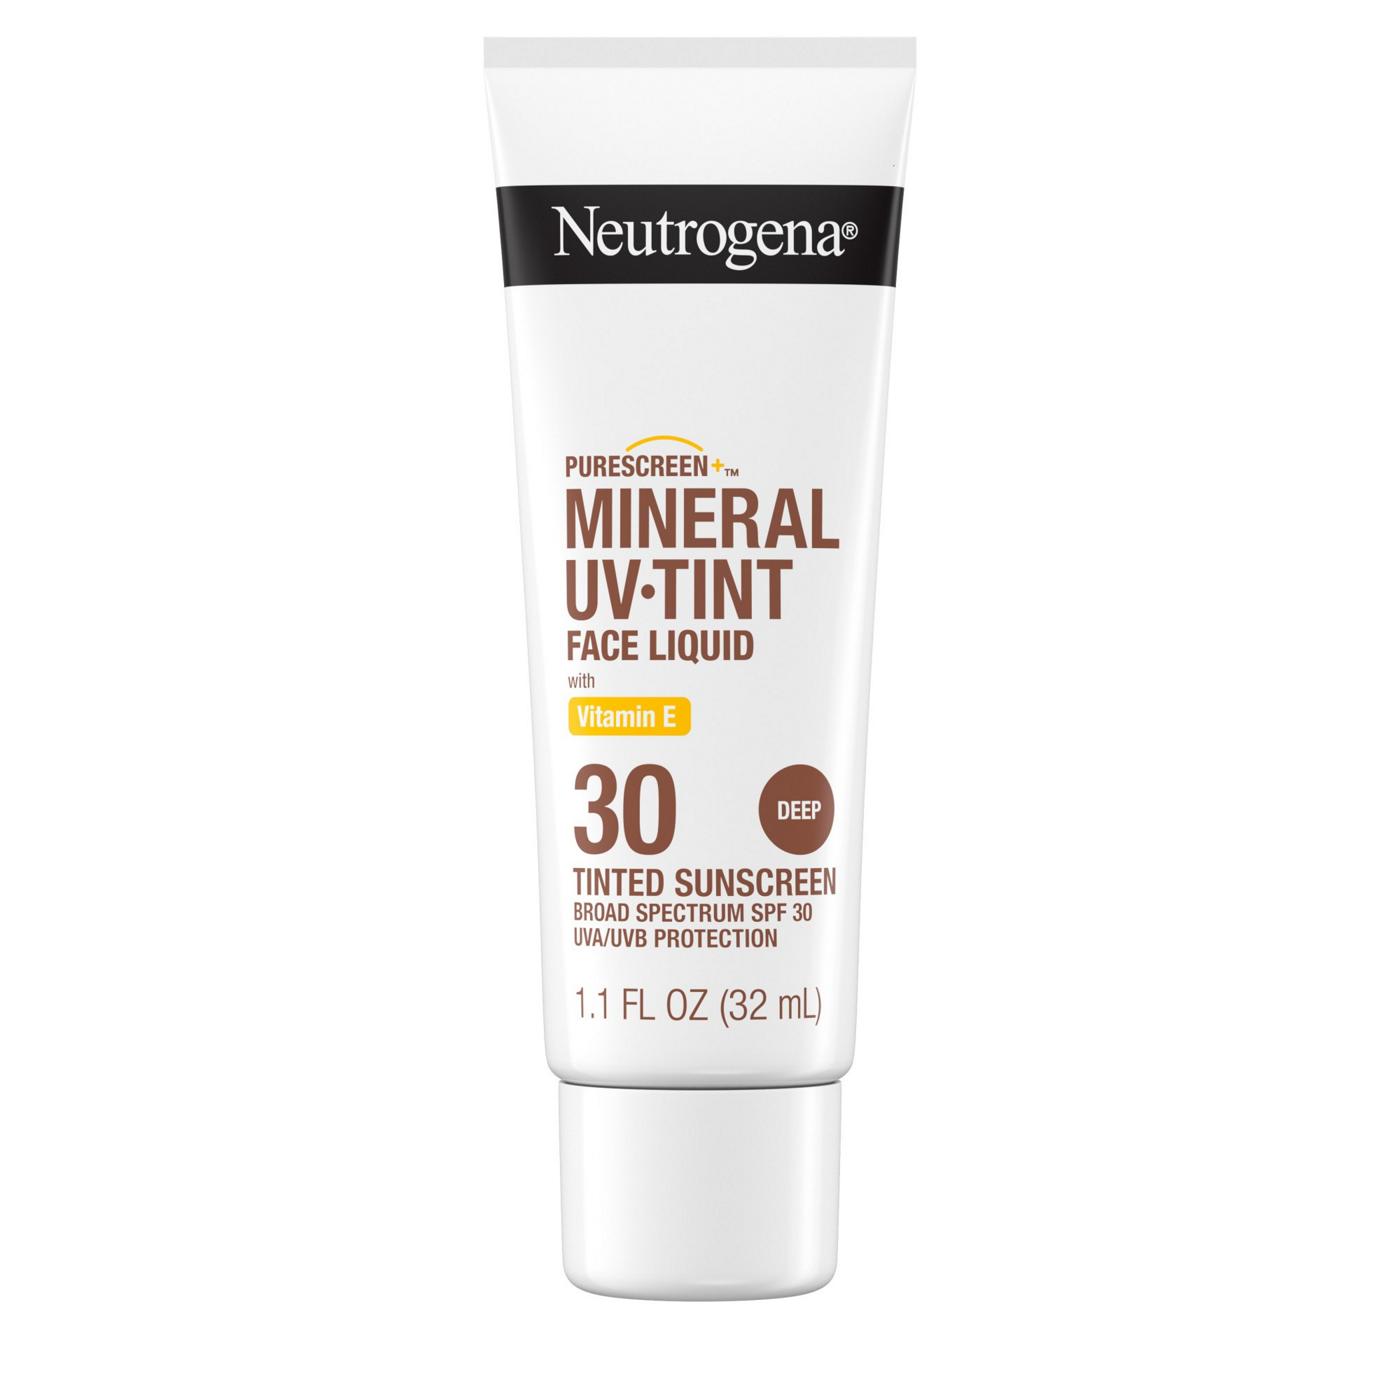 Neutrogena Purescreen+ Mineral Uv Tint Face Liquid With Vitamin E, Tinted Sunscreen Broad Spectrum SPF 30, Deep; image 7 of 8